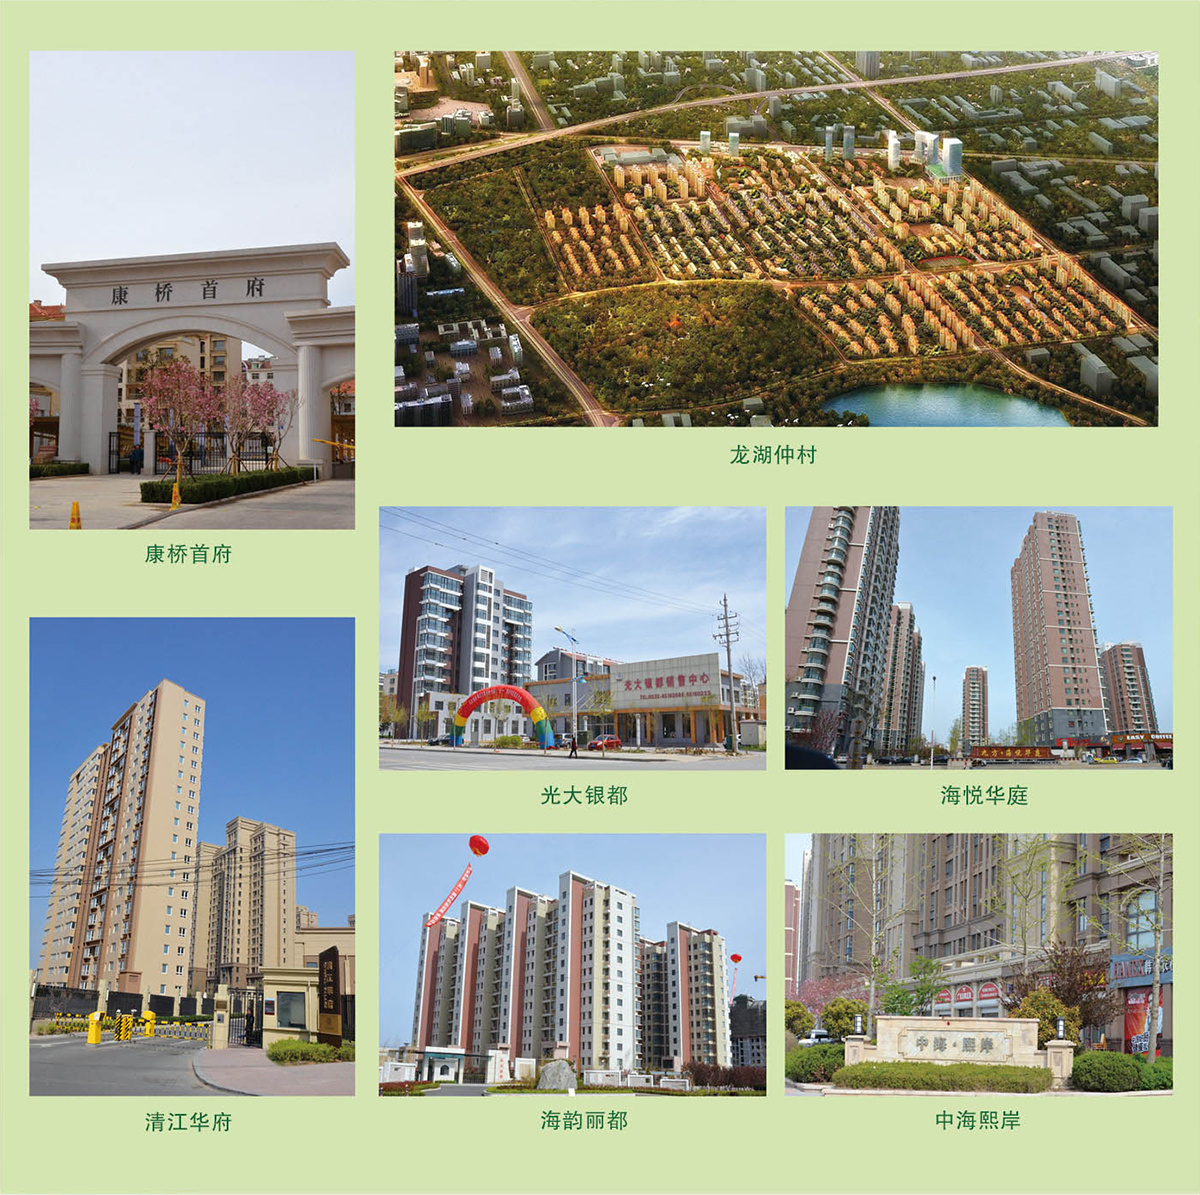 Key Projects in Qingdao